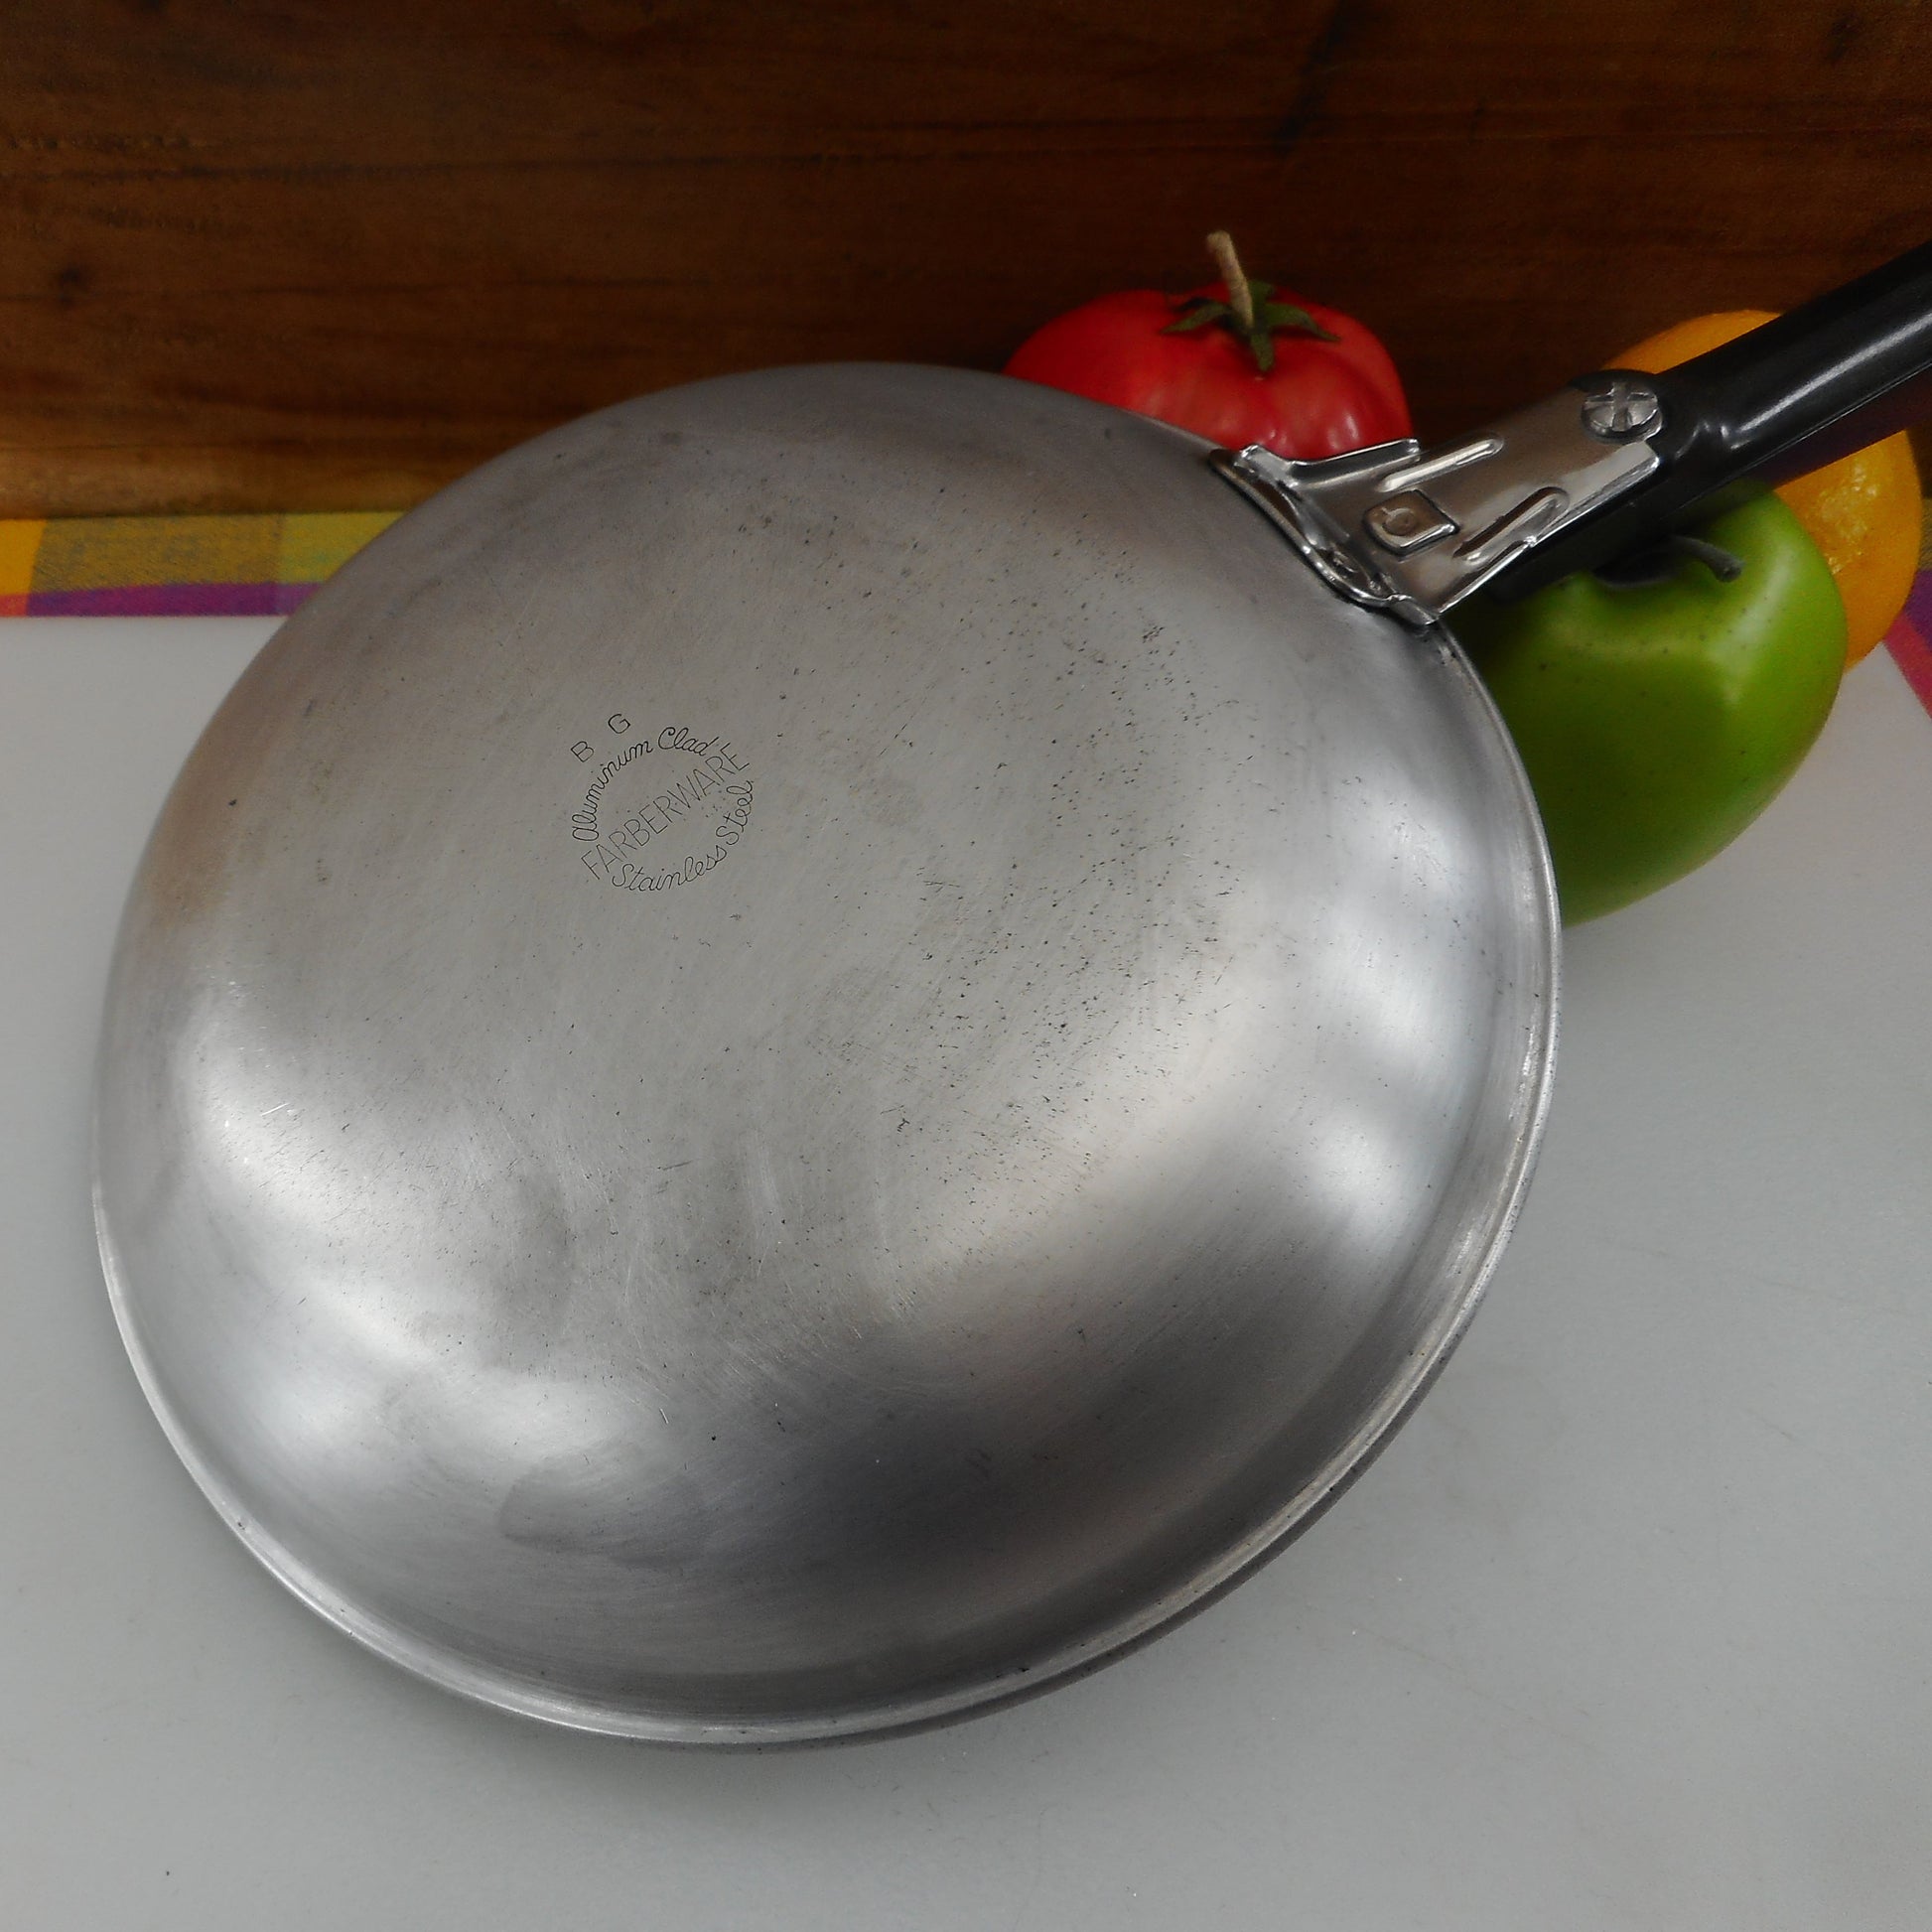 Farberware 7 Saute Pan With Lid / Vintage Stainless Steel Clad